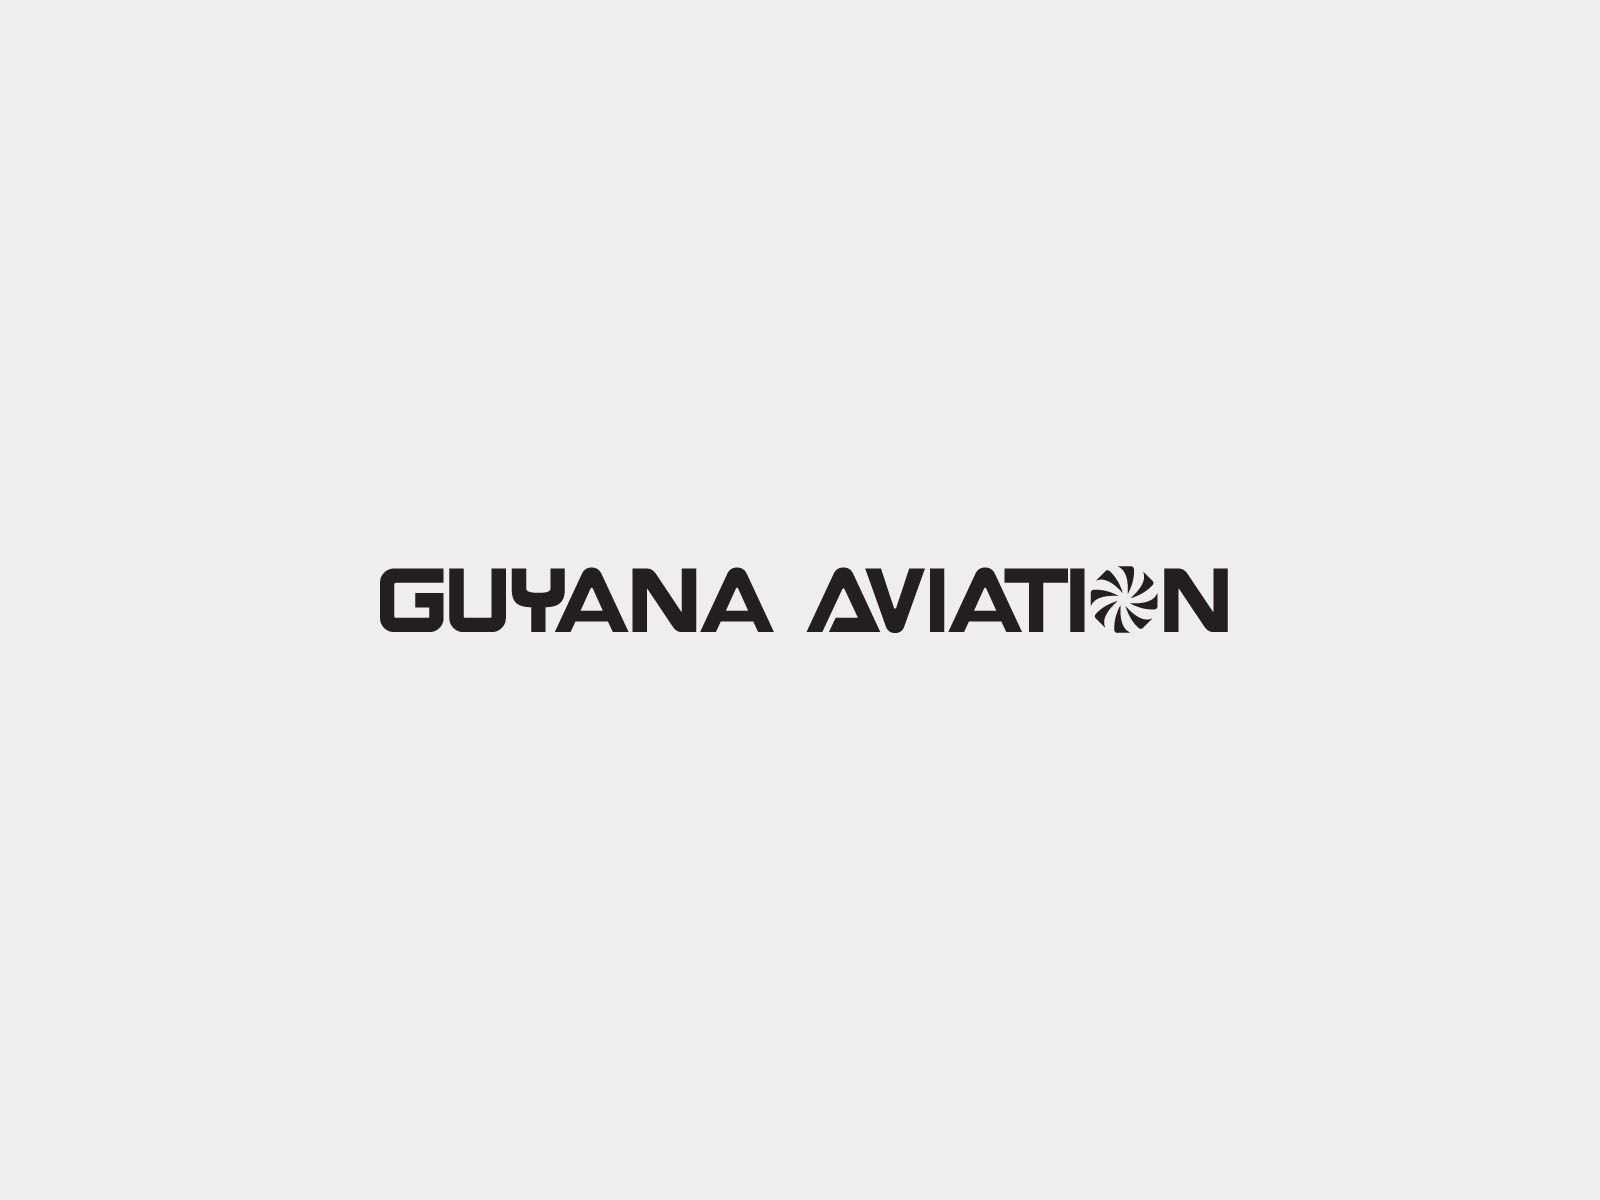 Guyana Aviation